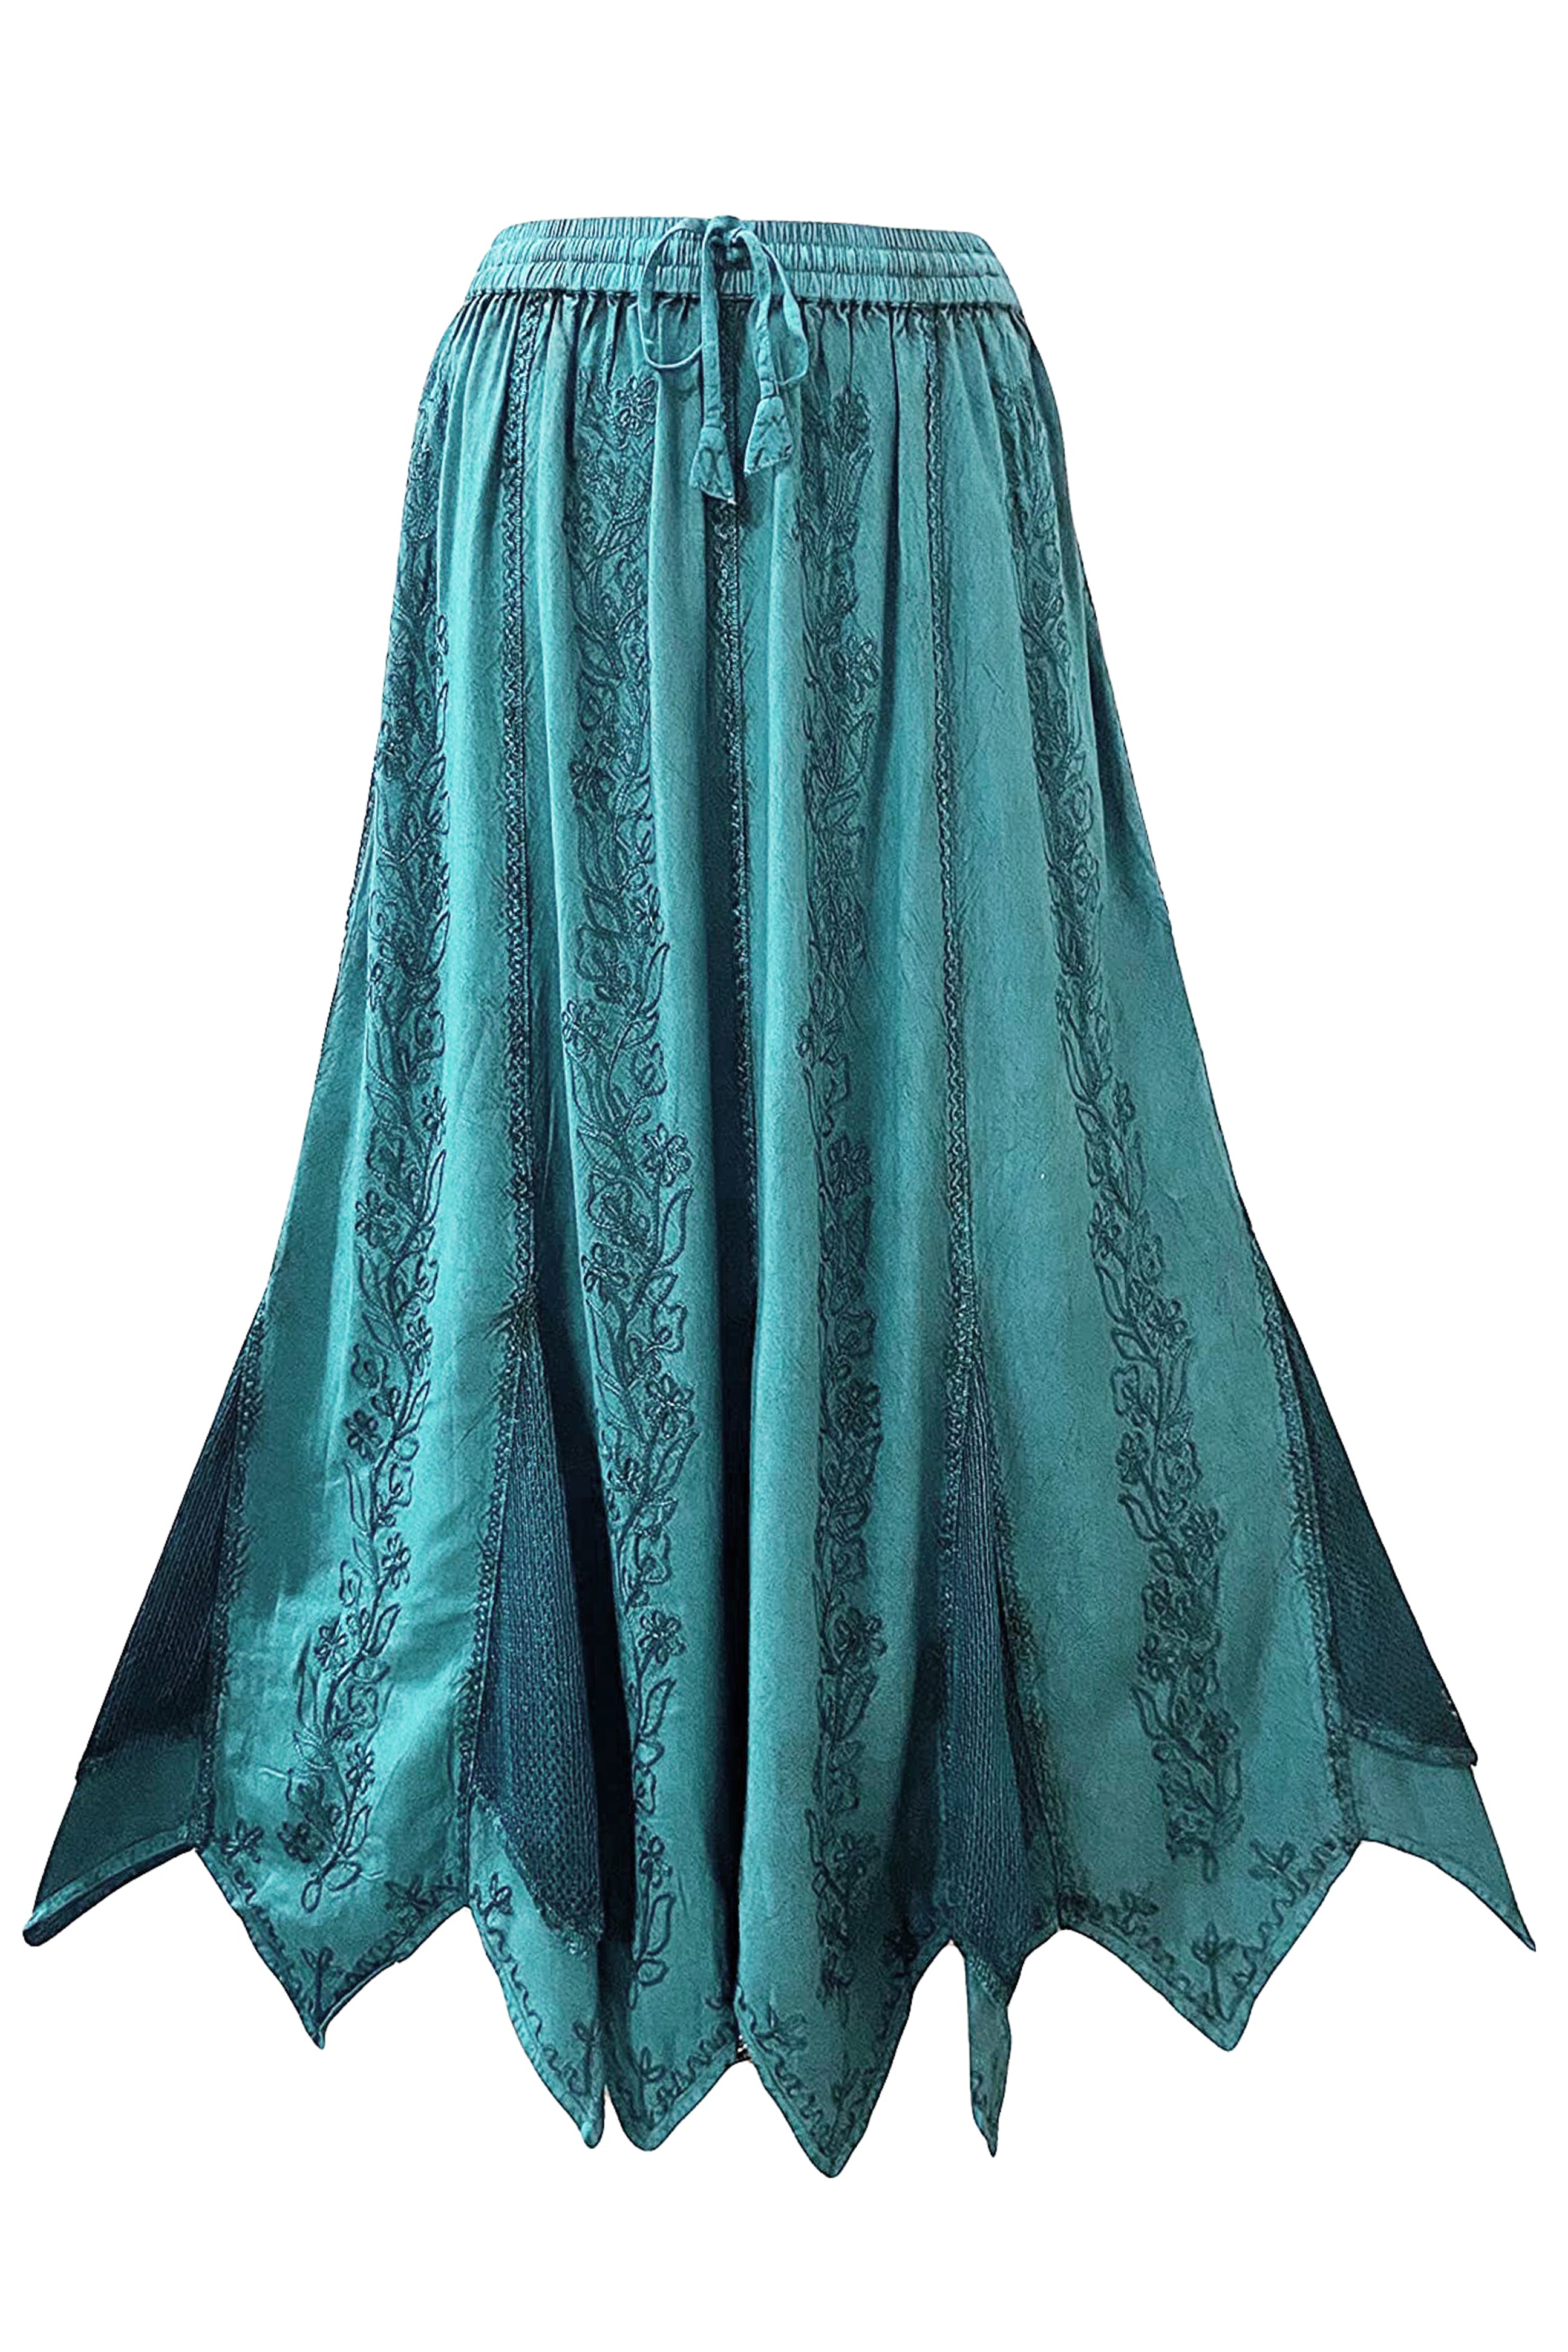 714 Skt Bohemian Gypsy Asymmetrical Hem Rayon Netted Skirt – Agan Traders